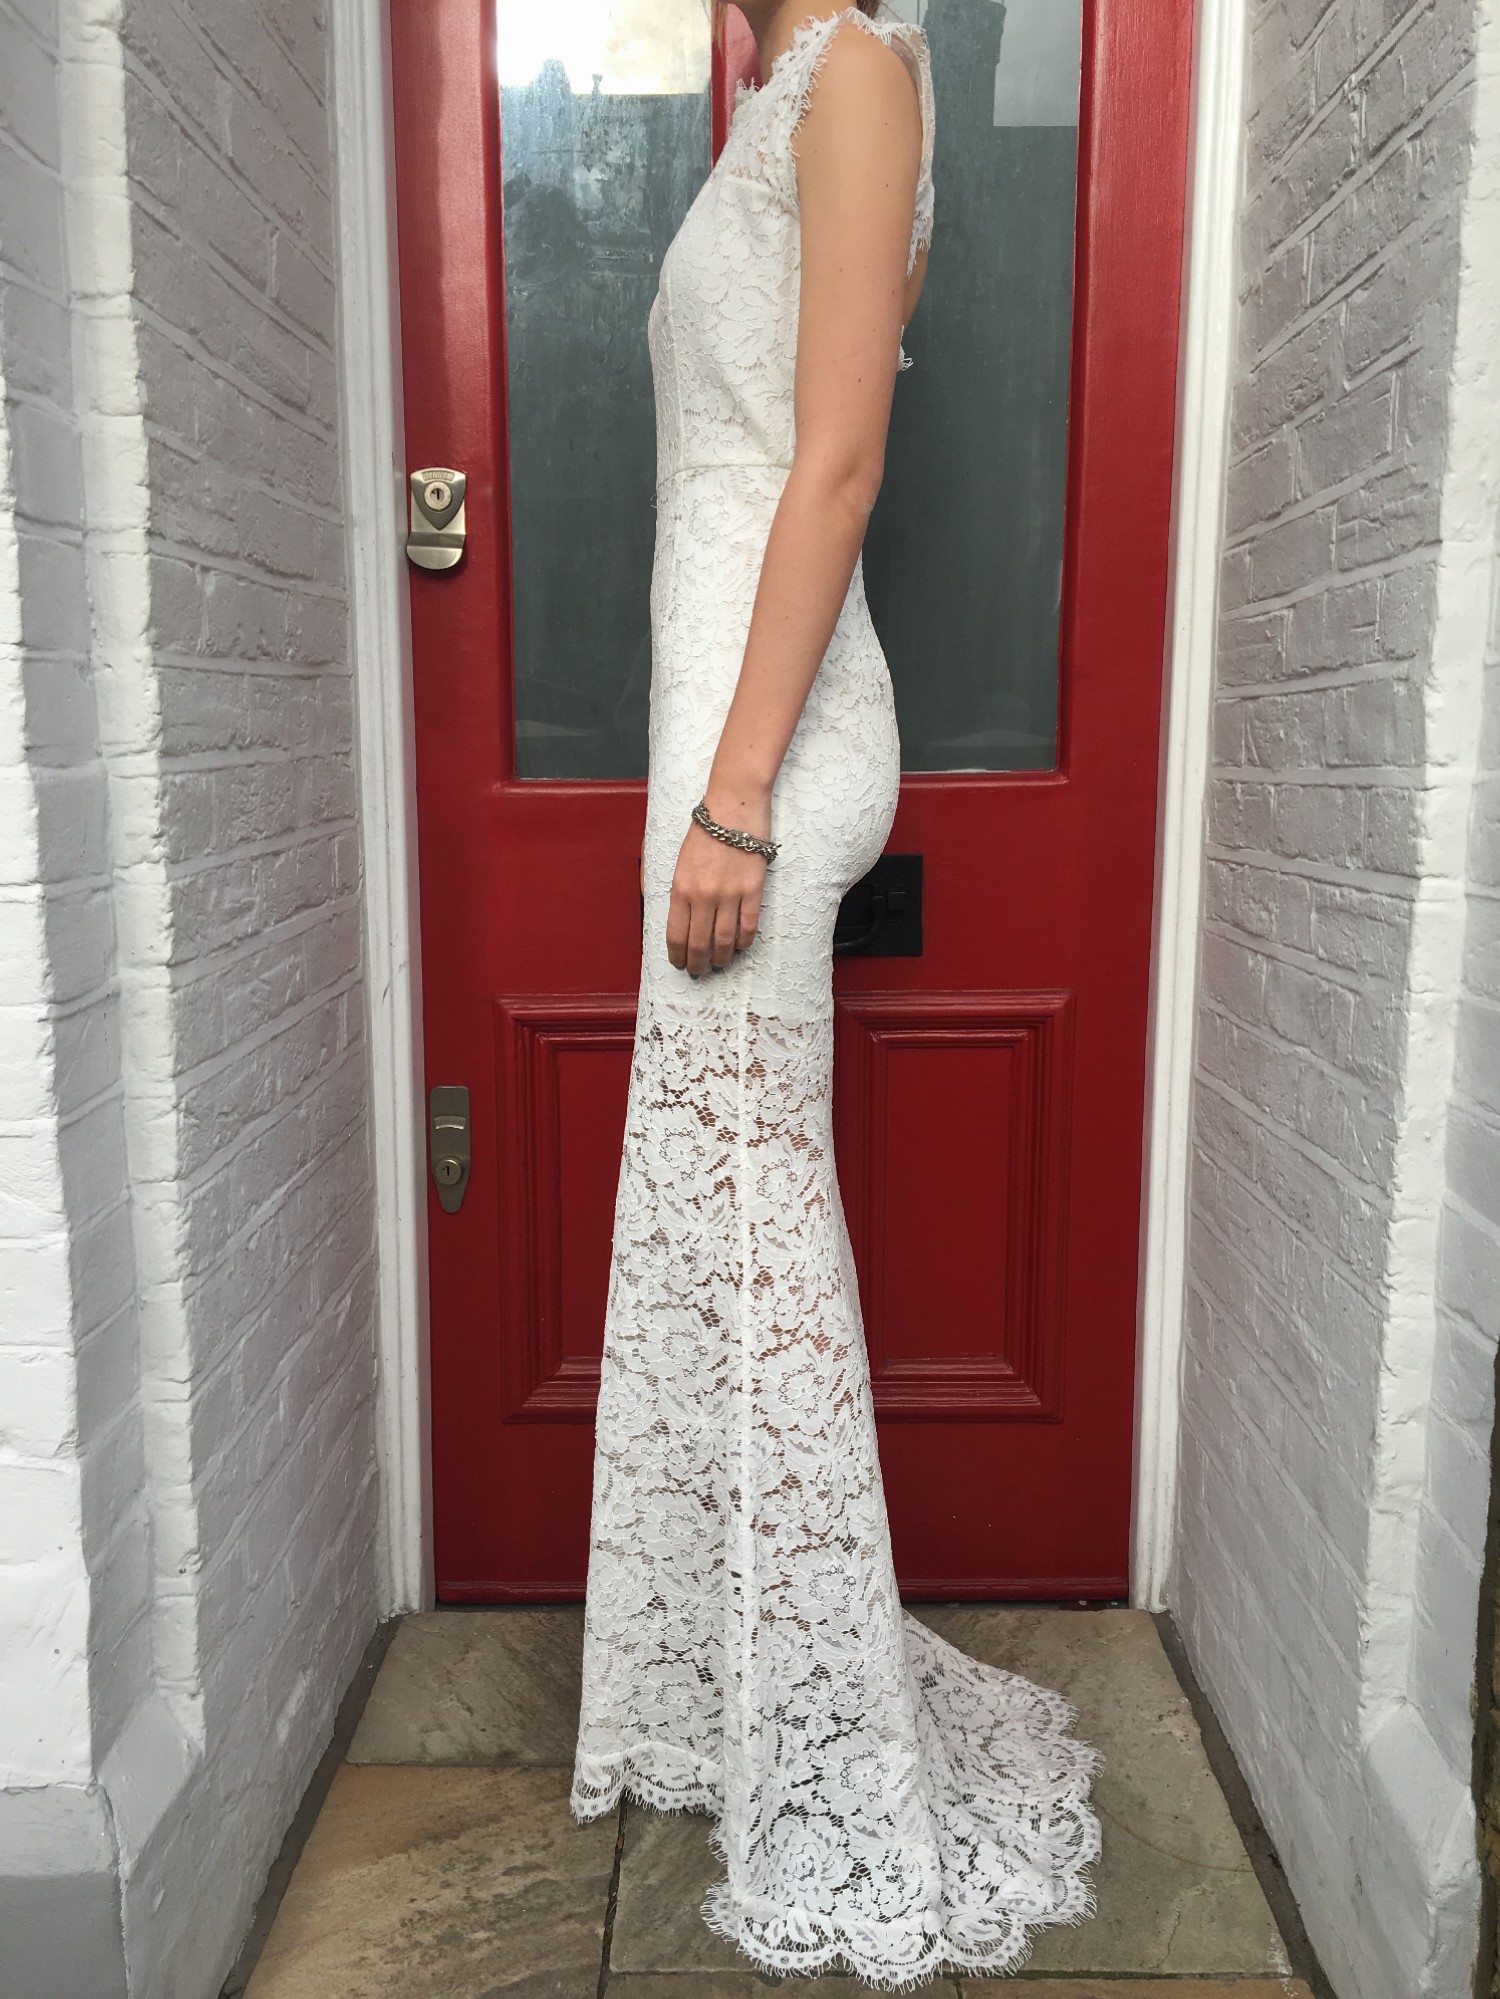 Rachel Zoe's Wedding Collection - Dress for the Wedding